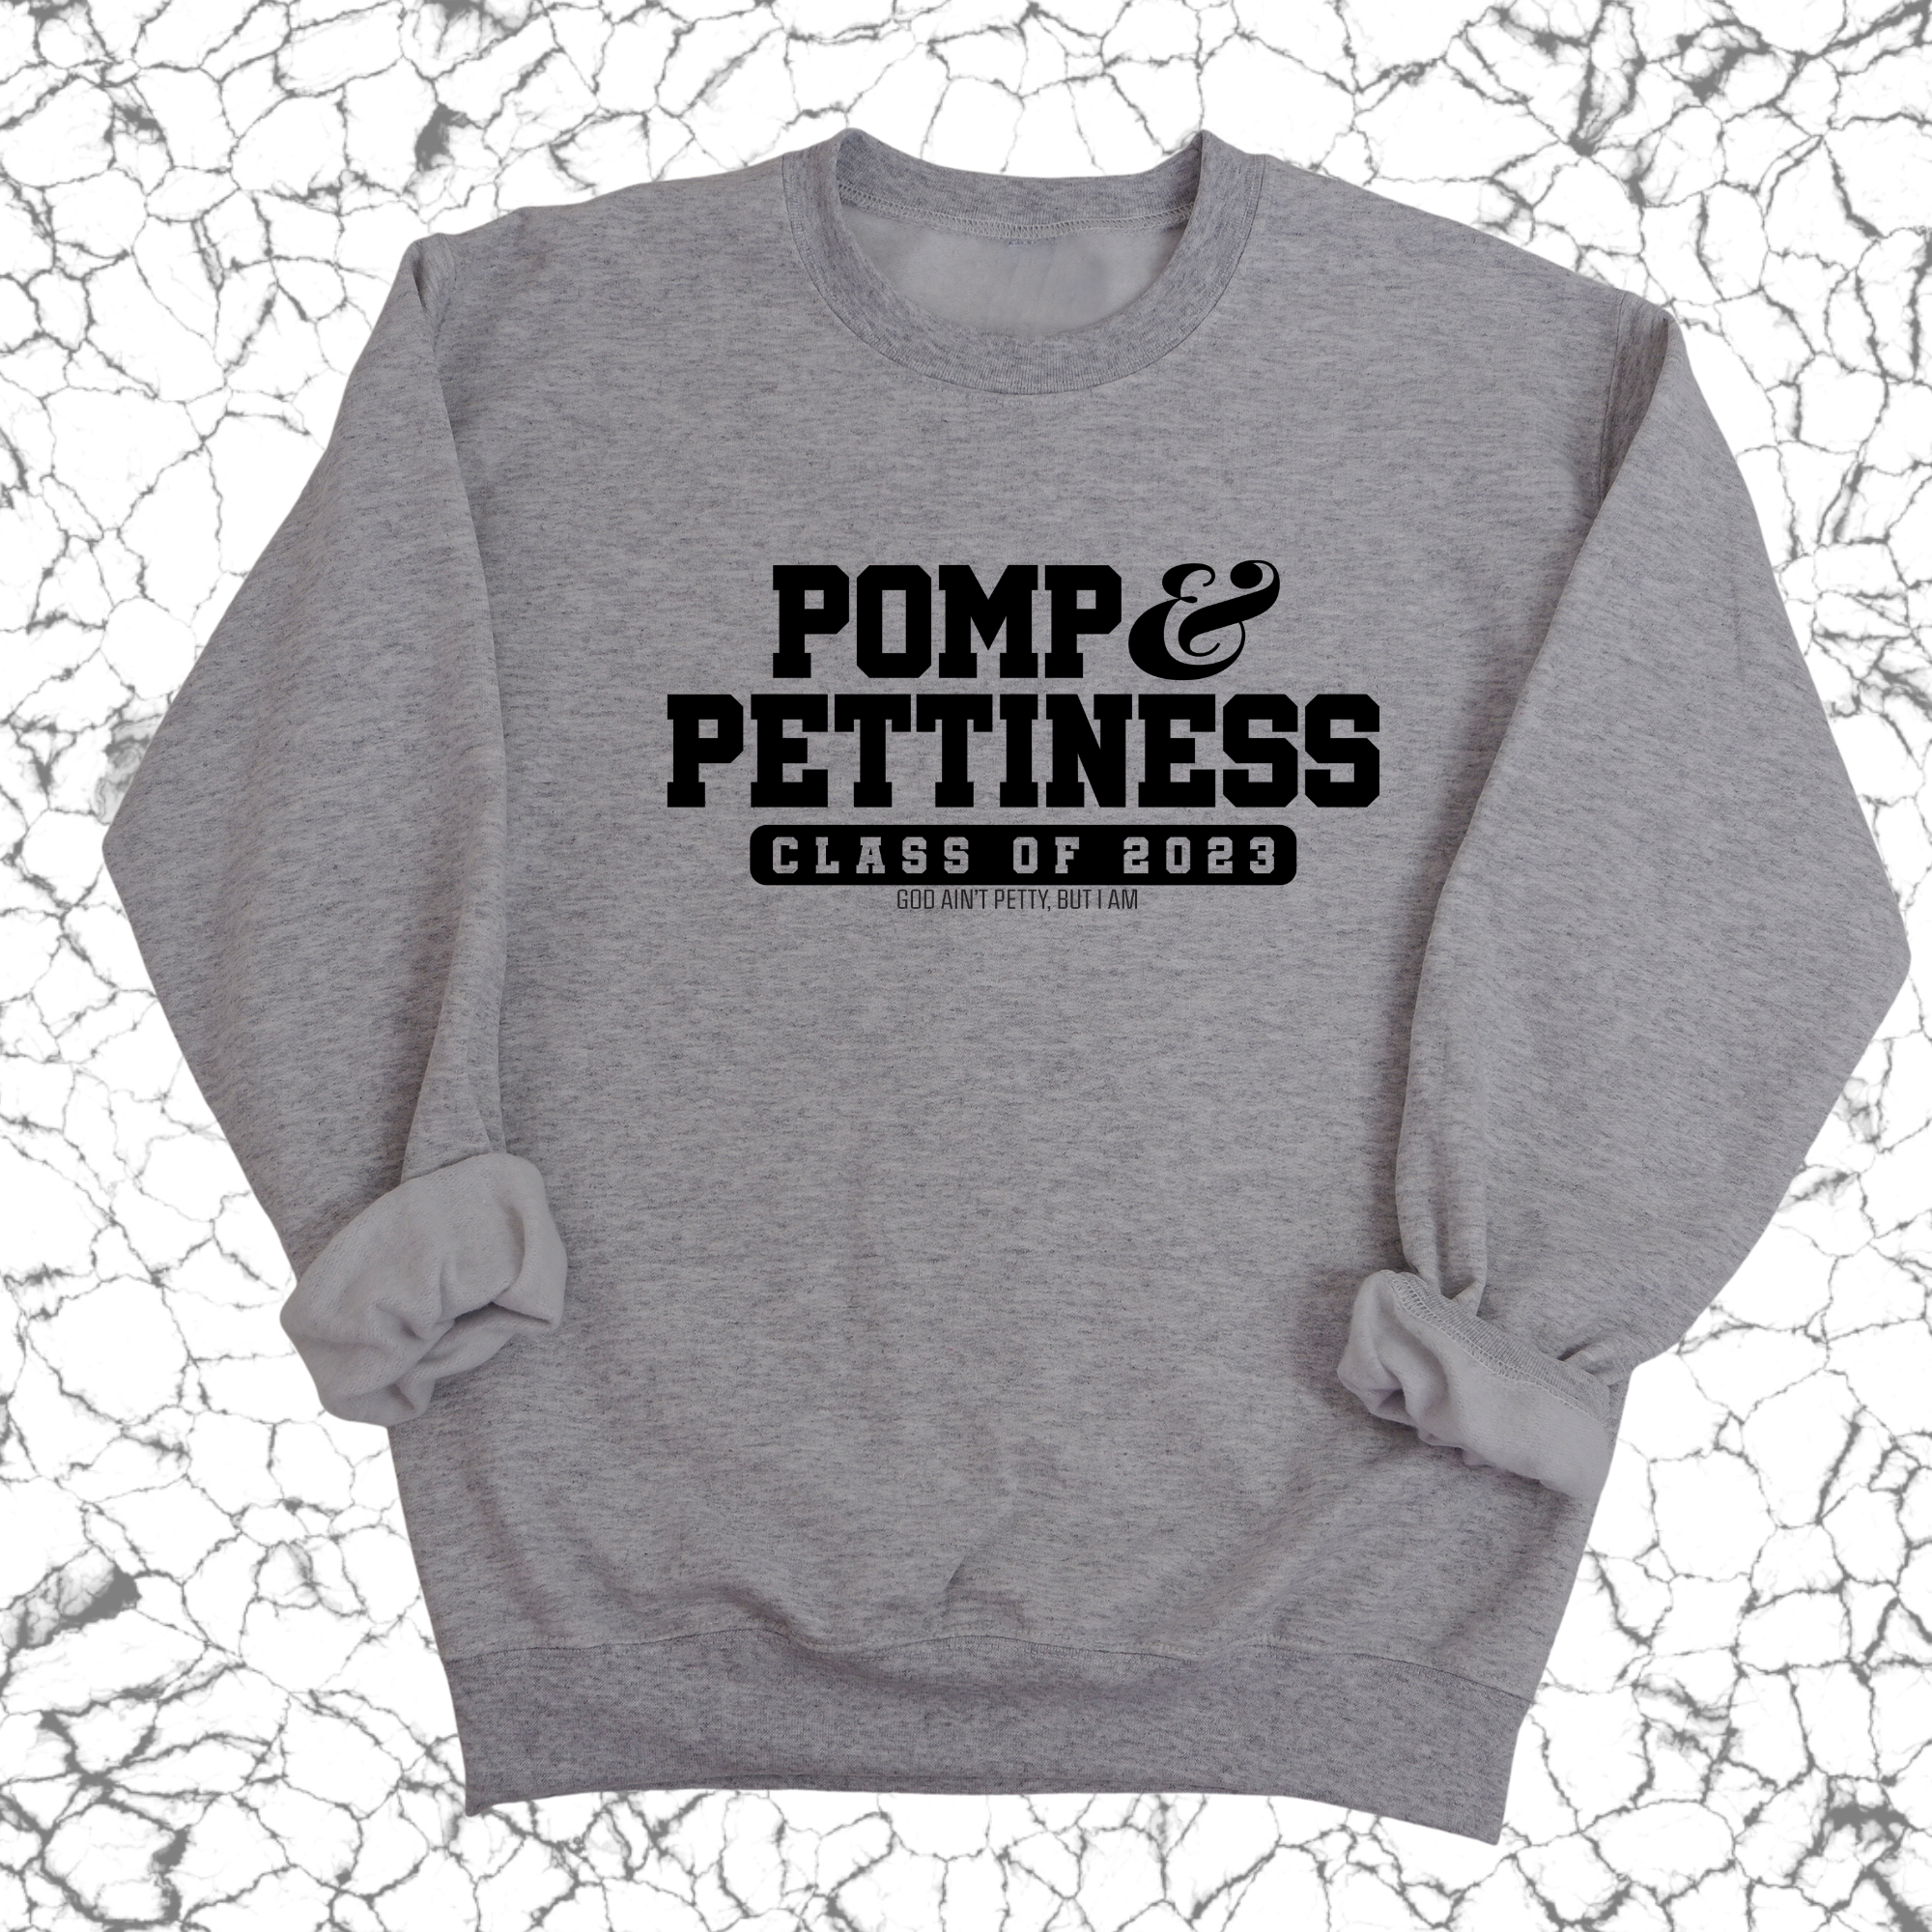 Pomp & Pettiness (Class of 2023) Unisex Sweatshirt-Sweatshirt-The Original God Ain't Petty But I Am